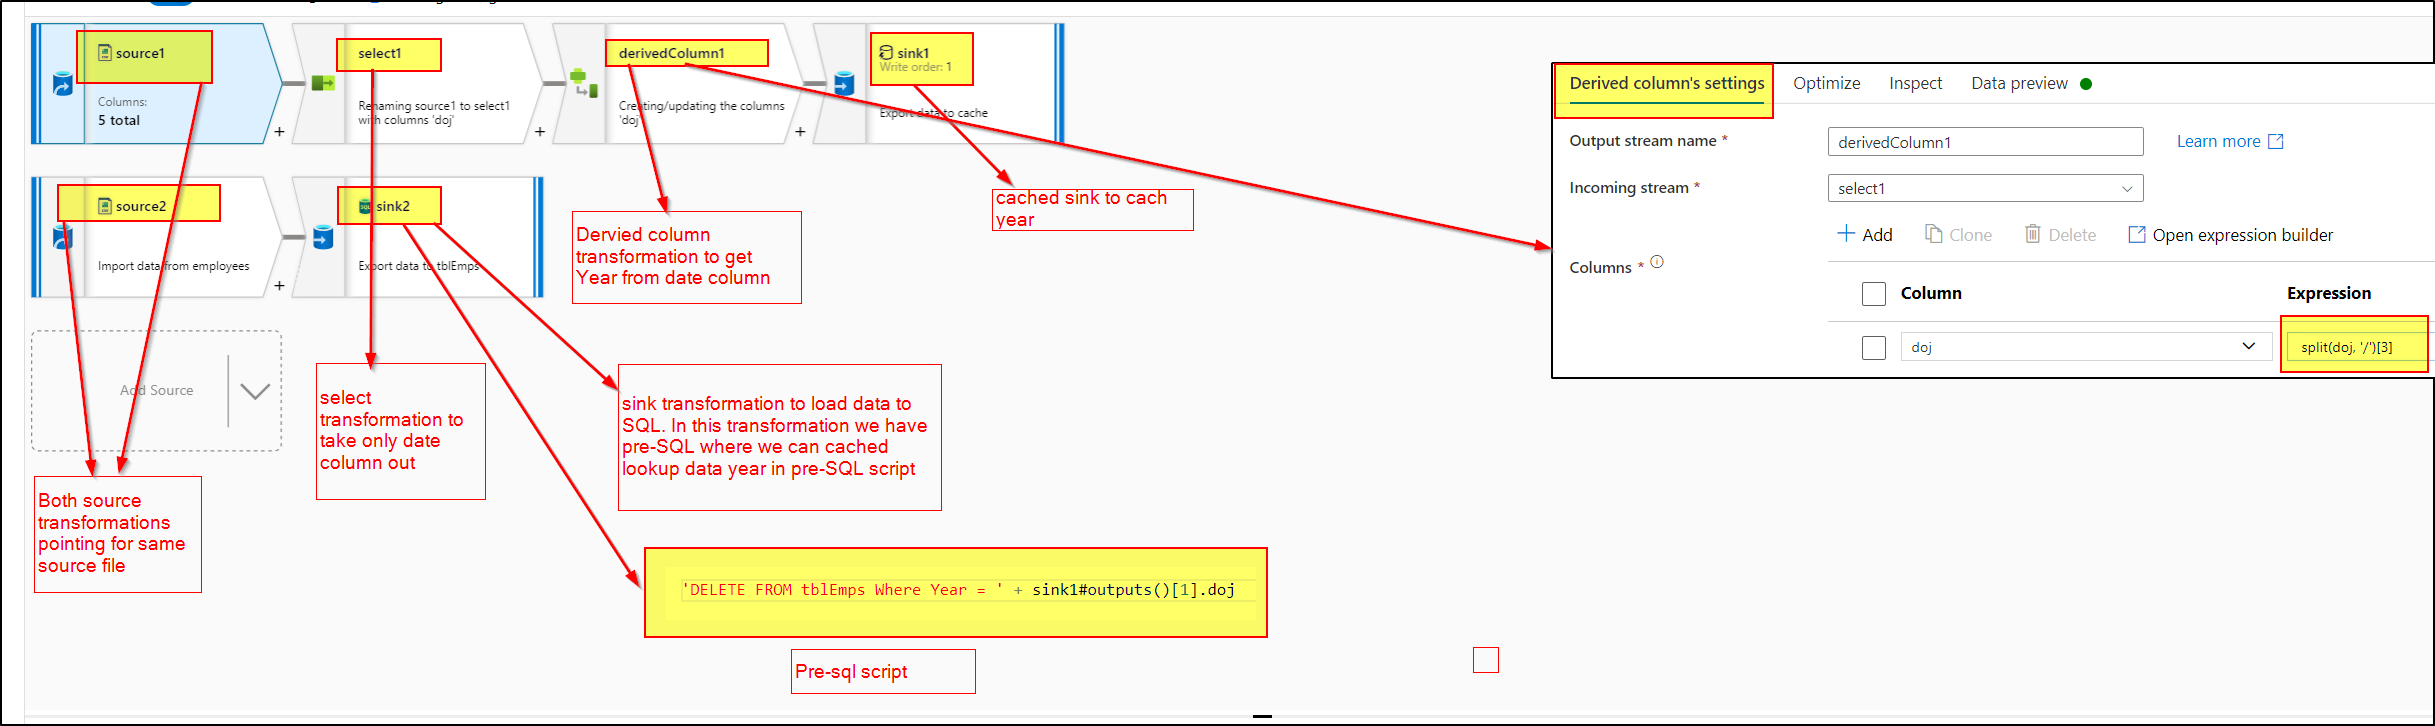 dynamic expression in pre SQL script on Azure SQL sink results in error  running pipeline - Microsoft Q&A